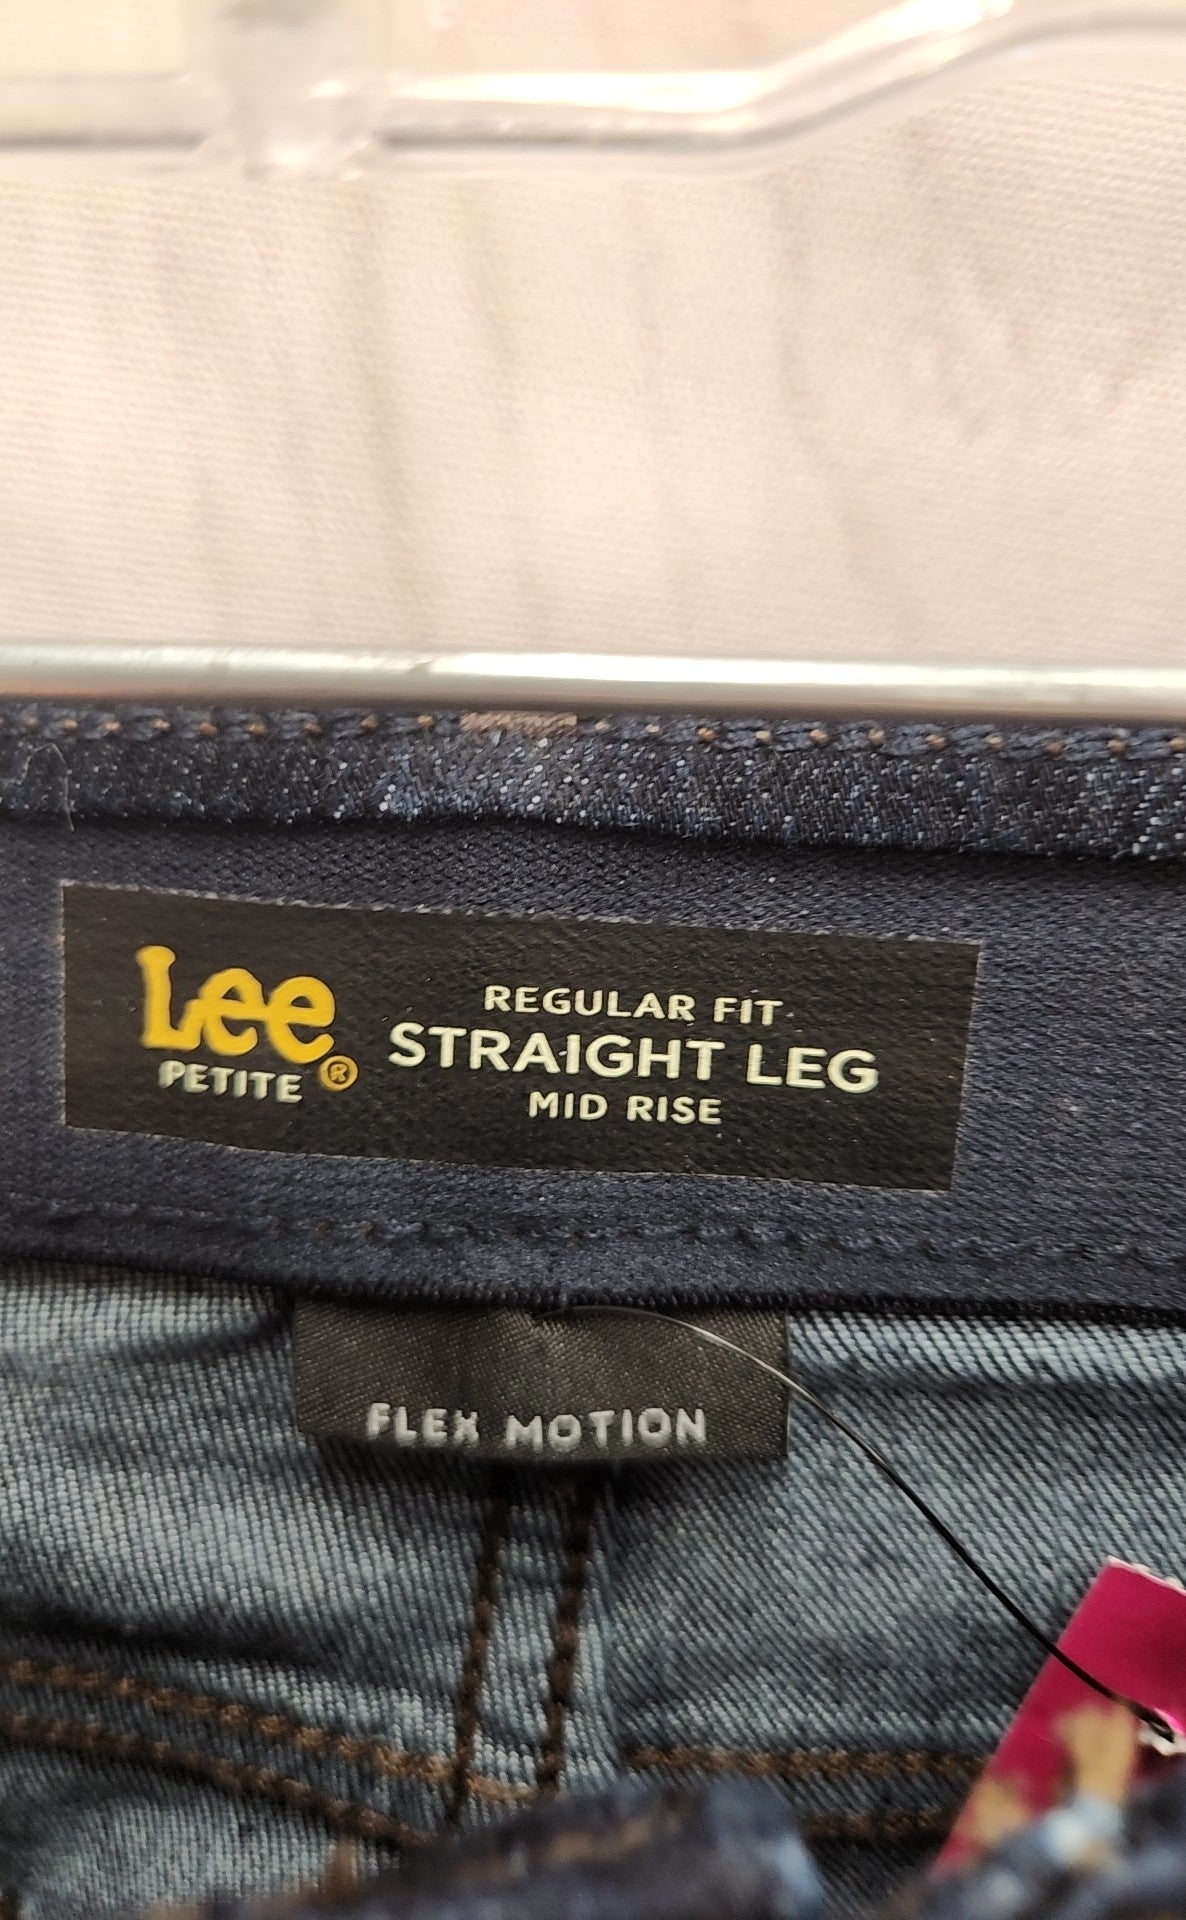 Lee Women's Size 16 S Petite Regular Fit Straight Leg Mid Rise Blue Jeans